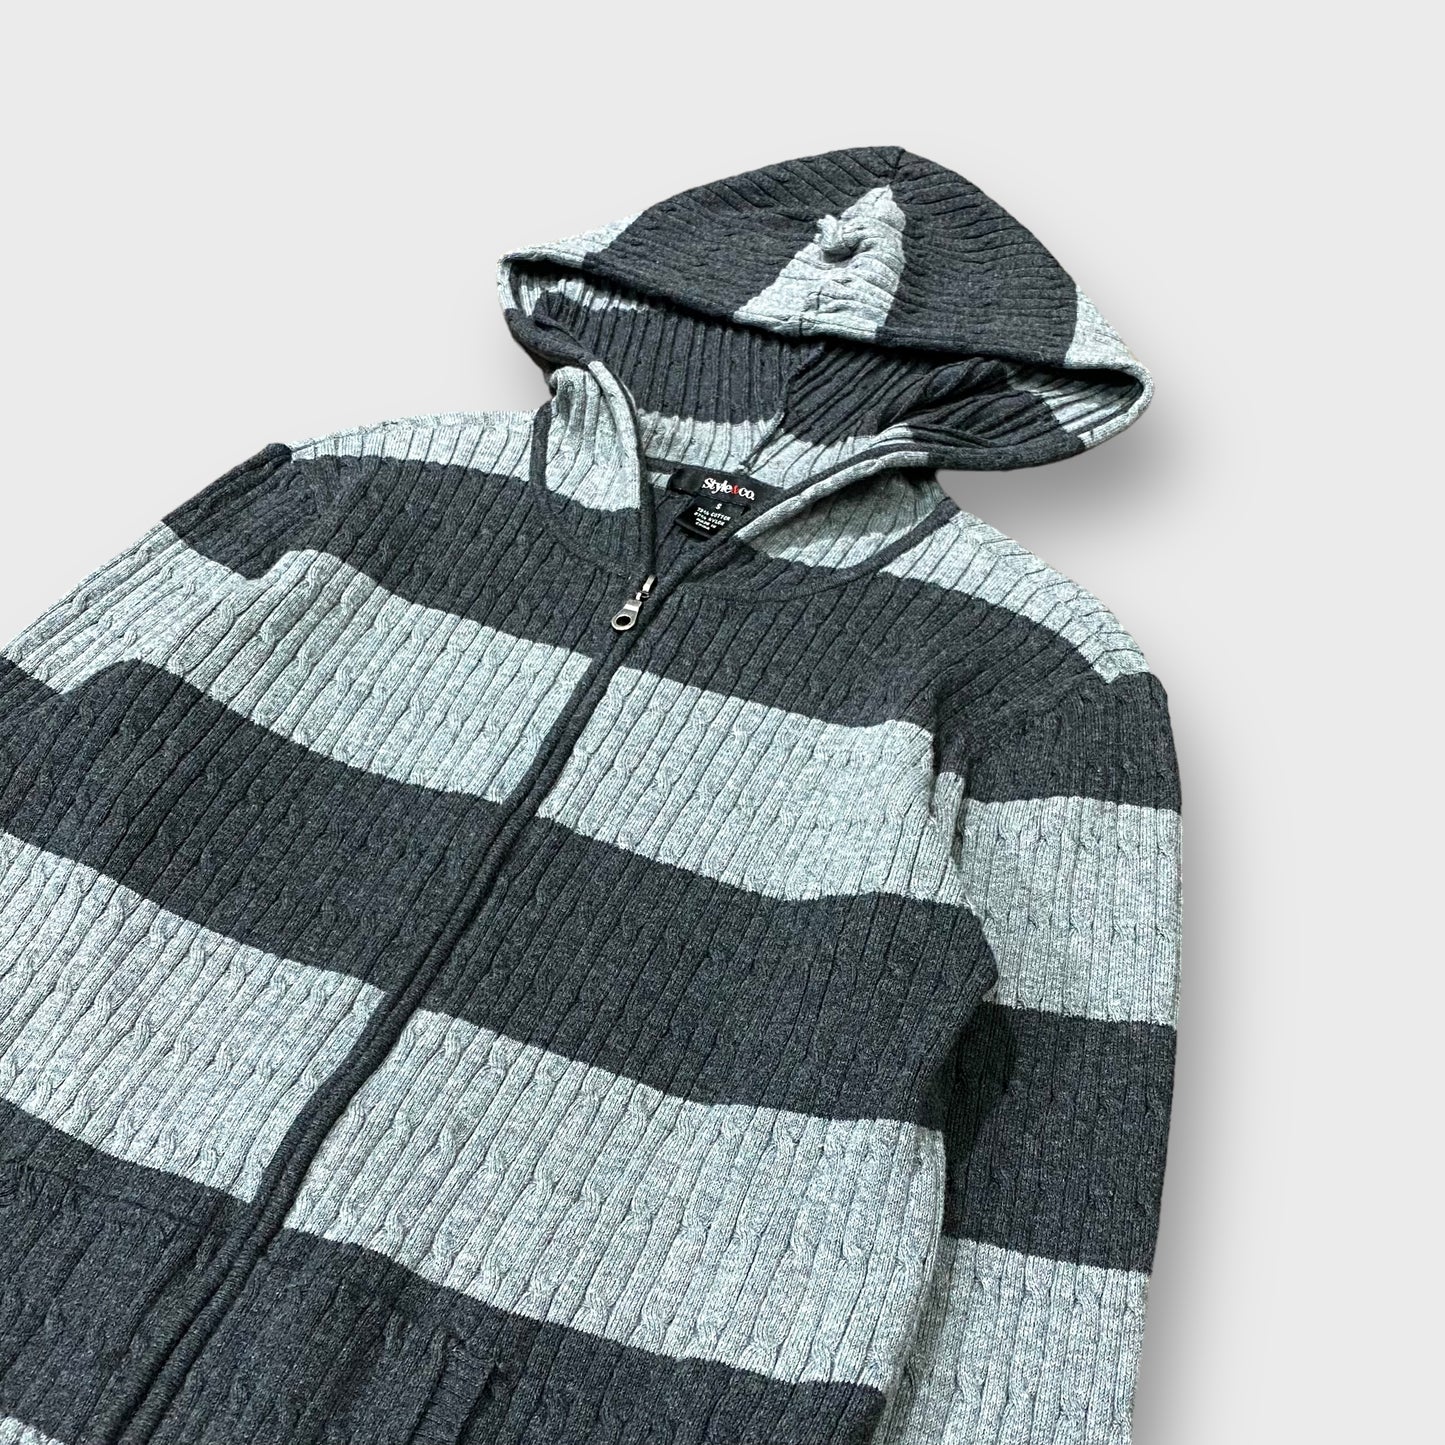 "Style & Co" Border pattern full zip knit hoodie